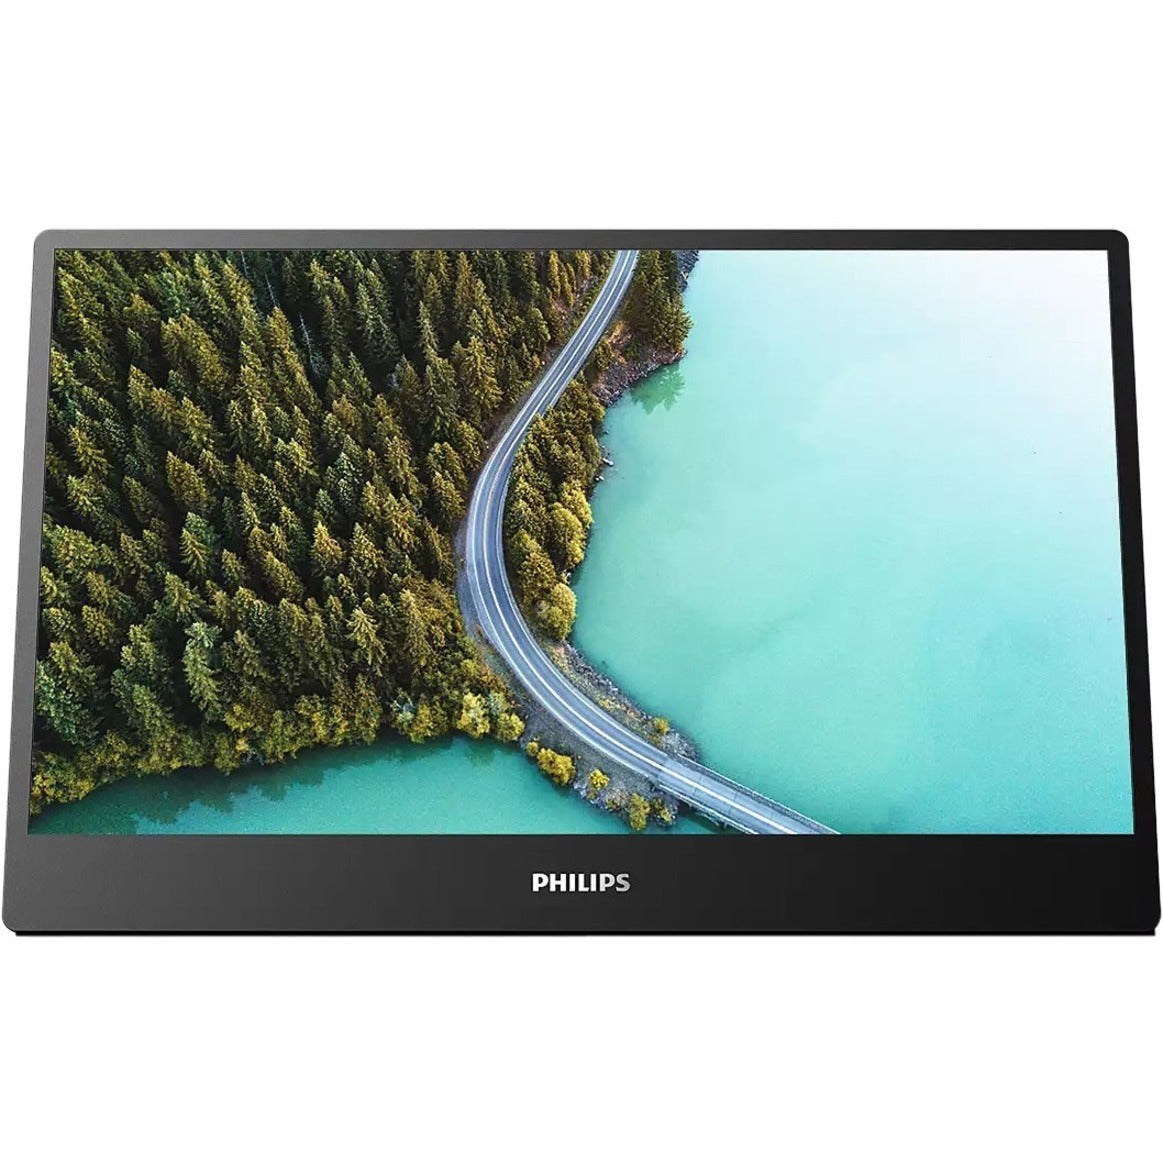 Philips 16B1P3300 15.6" Full HD LCD Monitor, Black, 1920 x 1080, 75 Hz, 700:1, 250 Nit, 48 Month Warranty